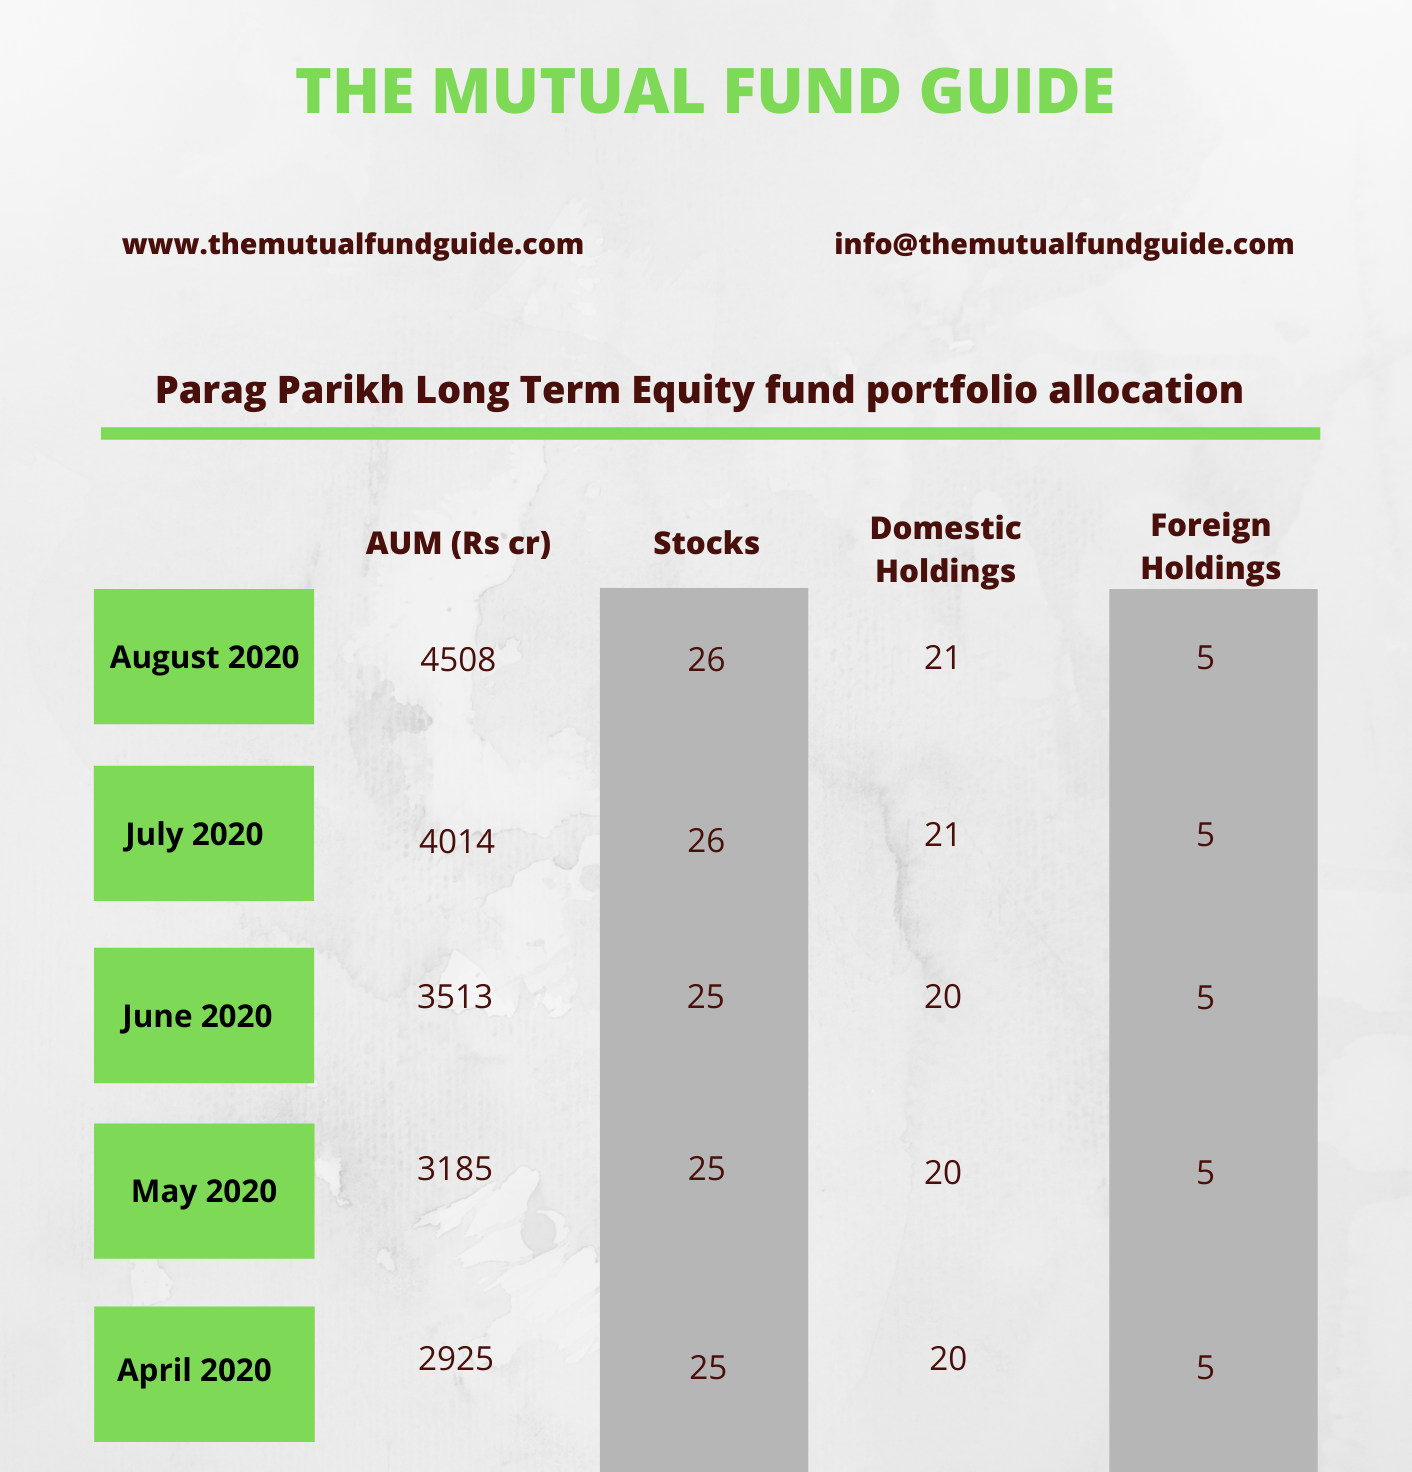 parag parikh long term equity fund